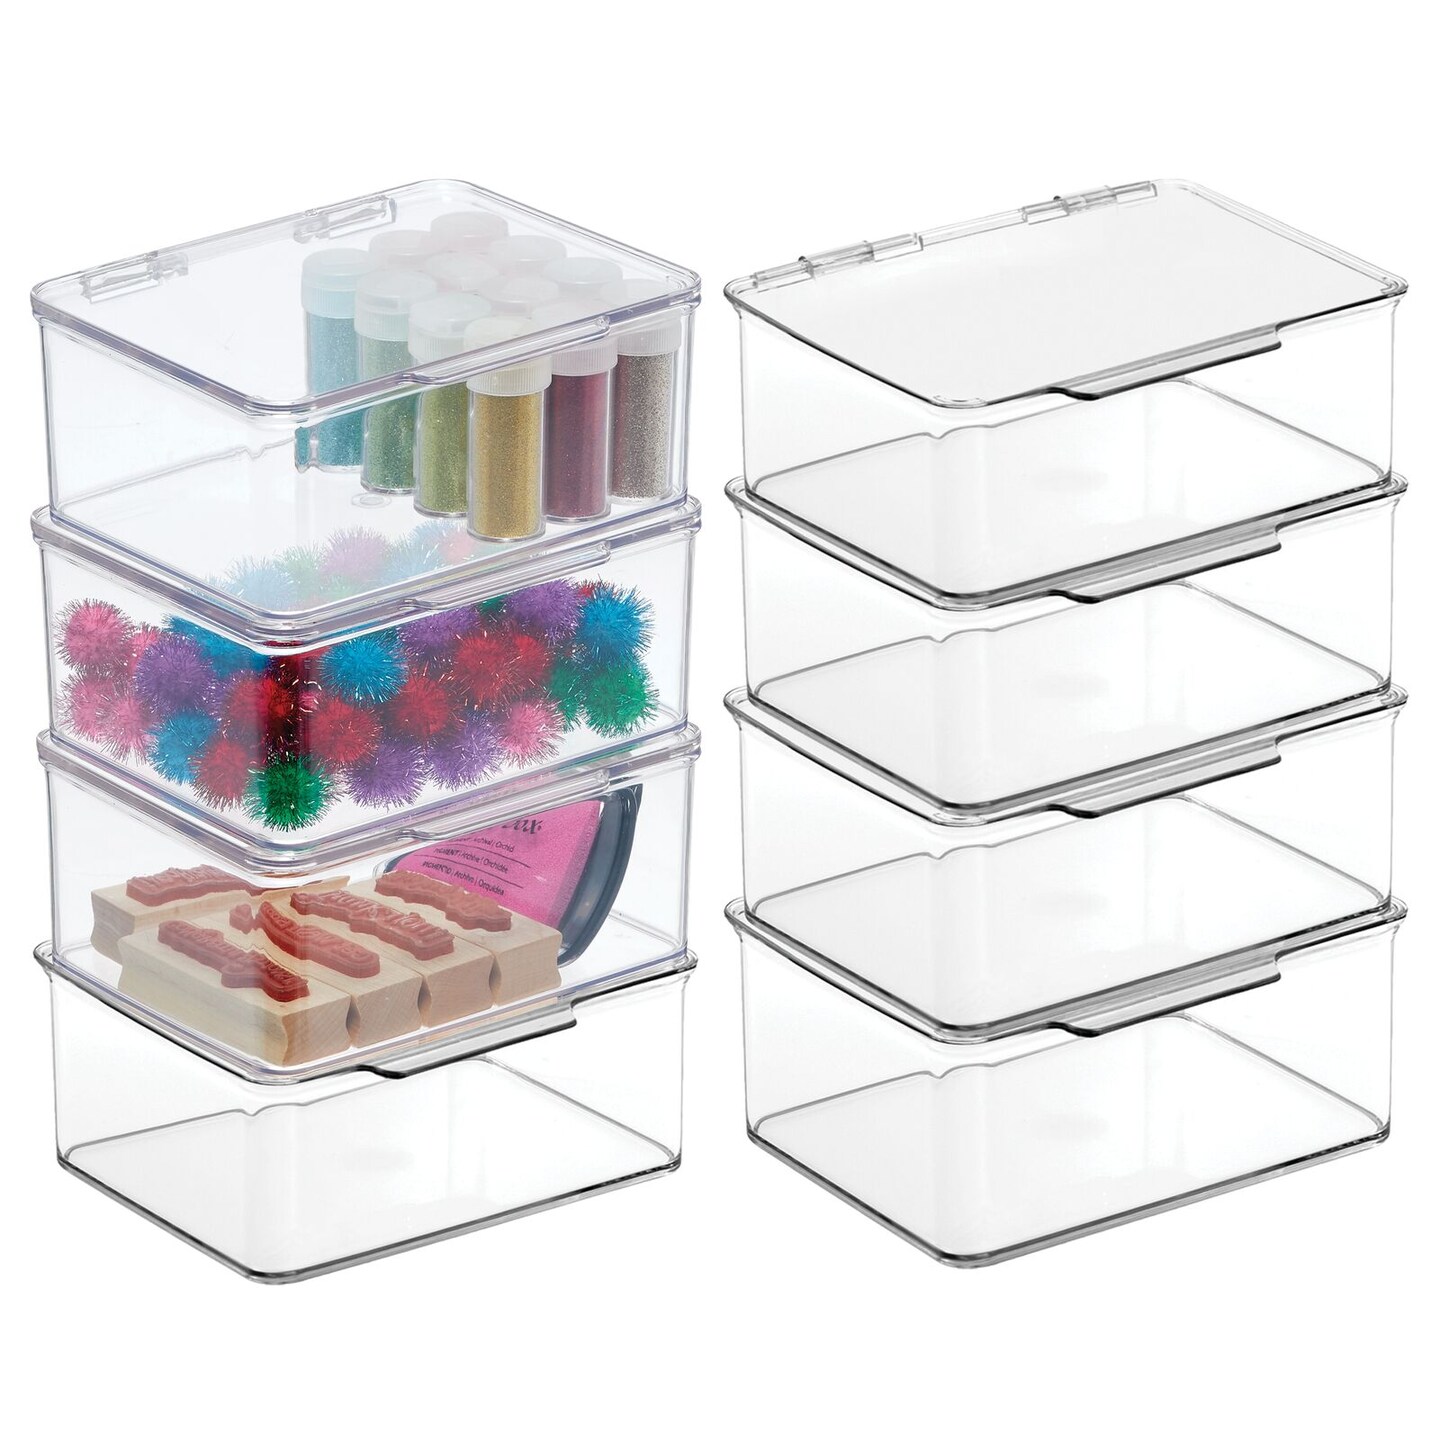 Mdesign Plastic Arts And Crafts Organizer Storage Bin Container